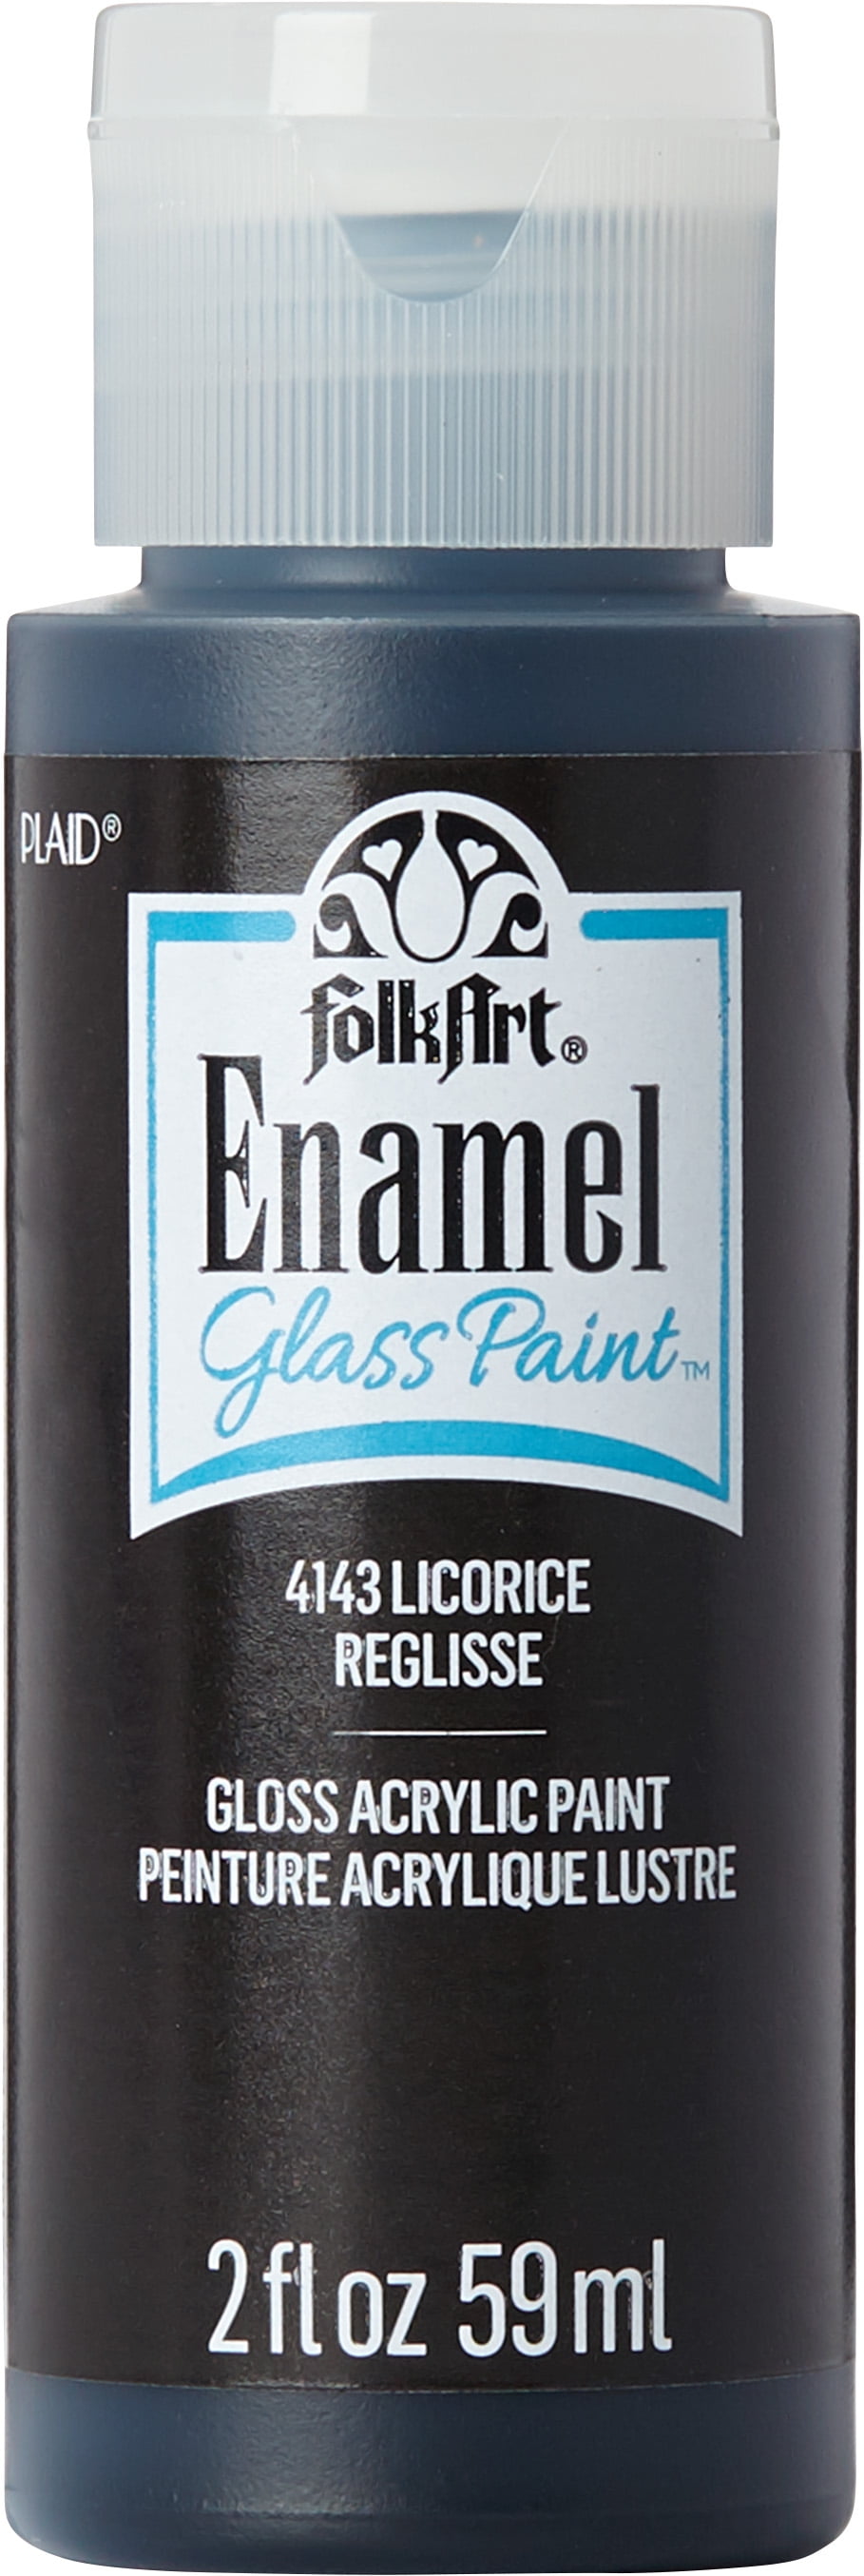 FolkArt Enamel Acrylic Craft Paint, Gloss Finish, Licorice, 2 fl oz